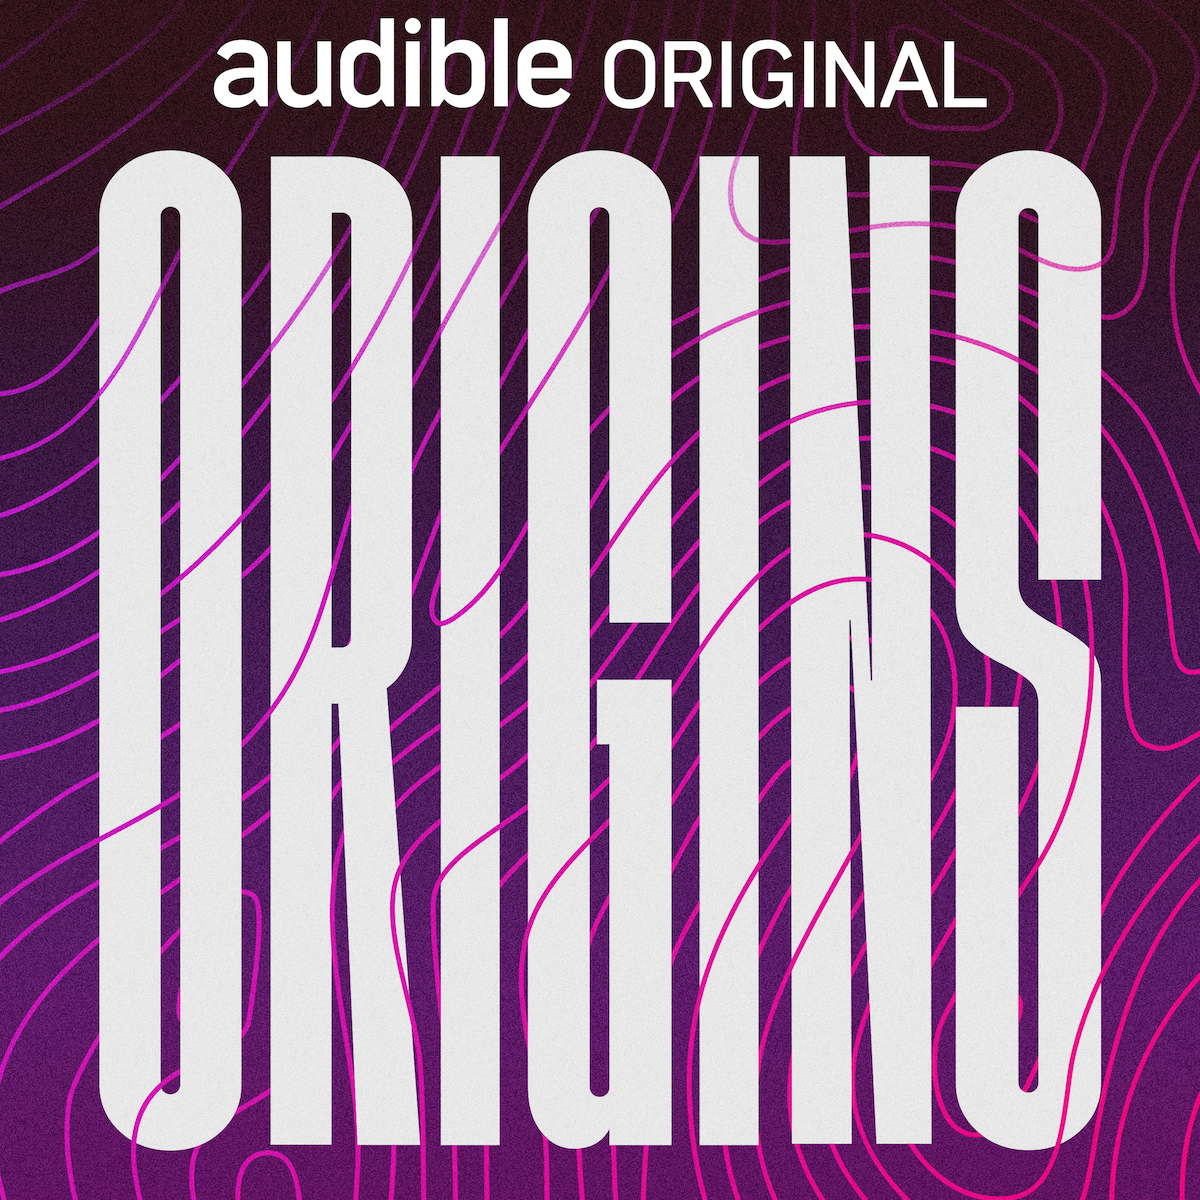 Origins Podcast Key Art